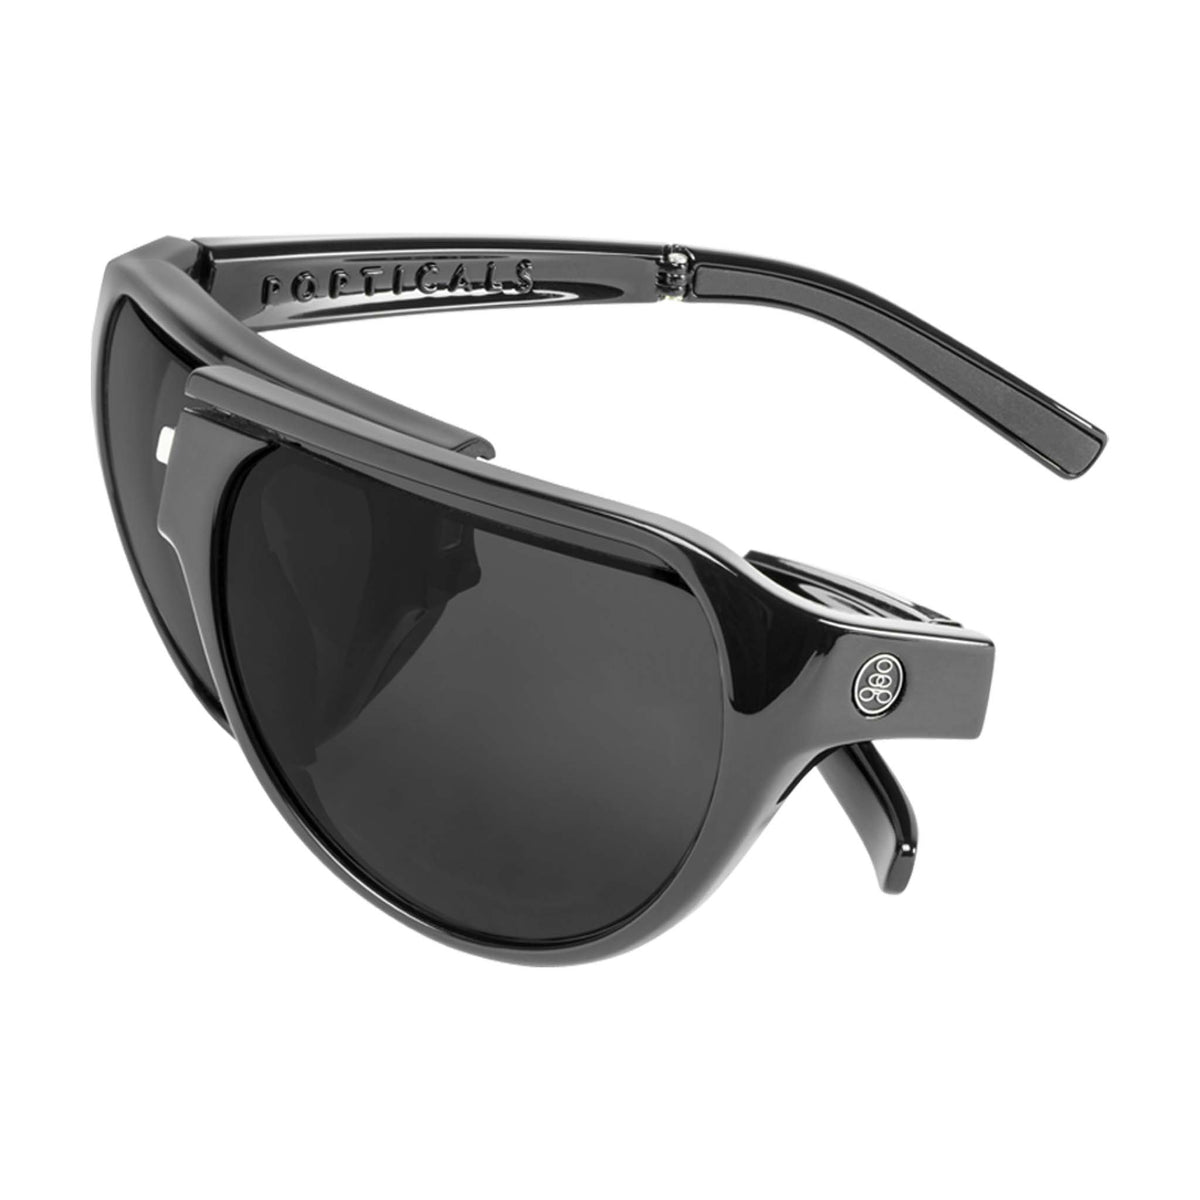 Popticals, Premium Compact Sunglasses, PopAir, 300010-BGGP, Polarized Sunglasses, Gloss Black Frame, Gray Lenses, Spider View